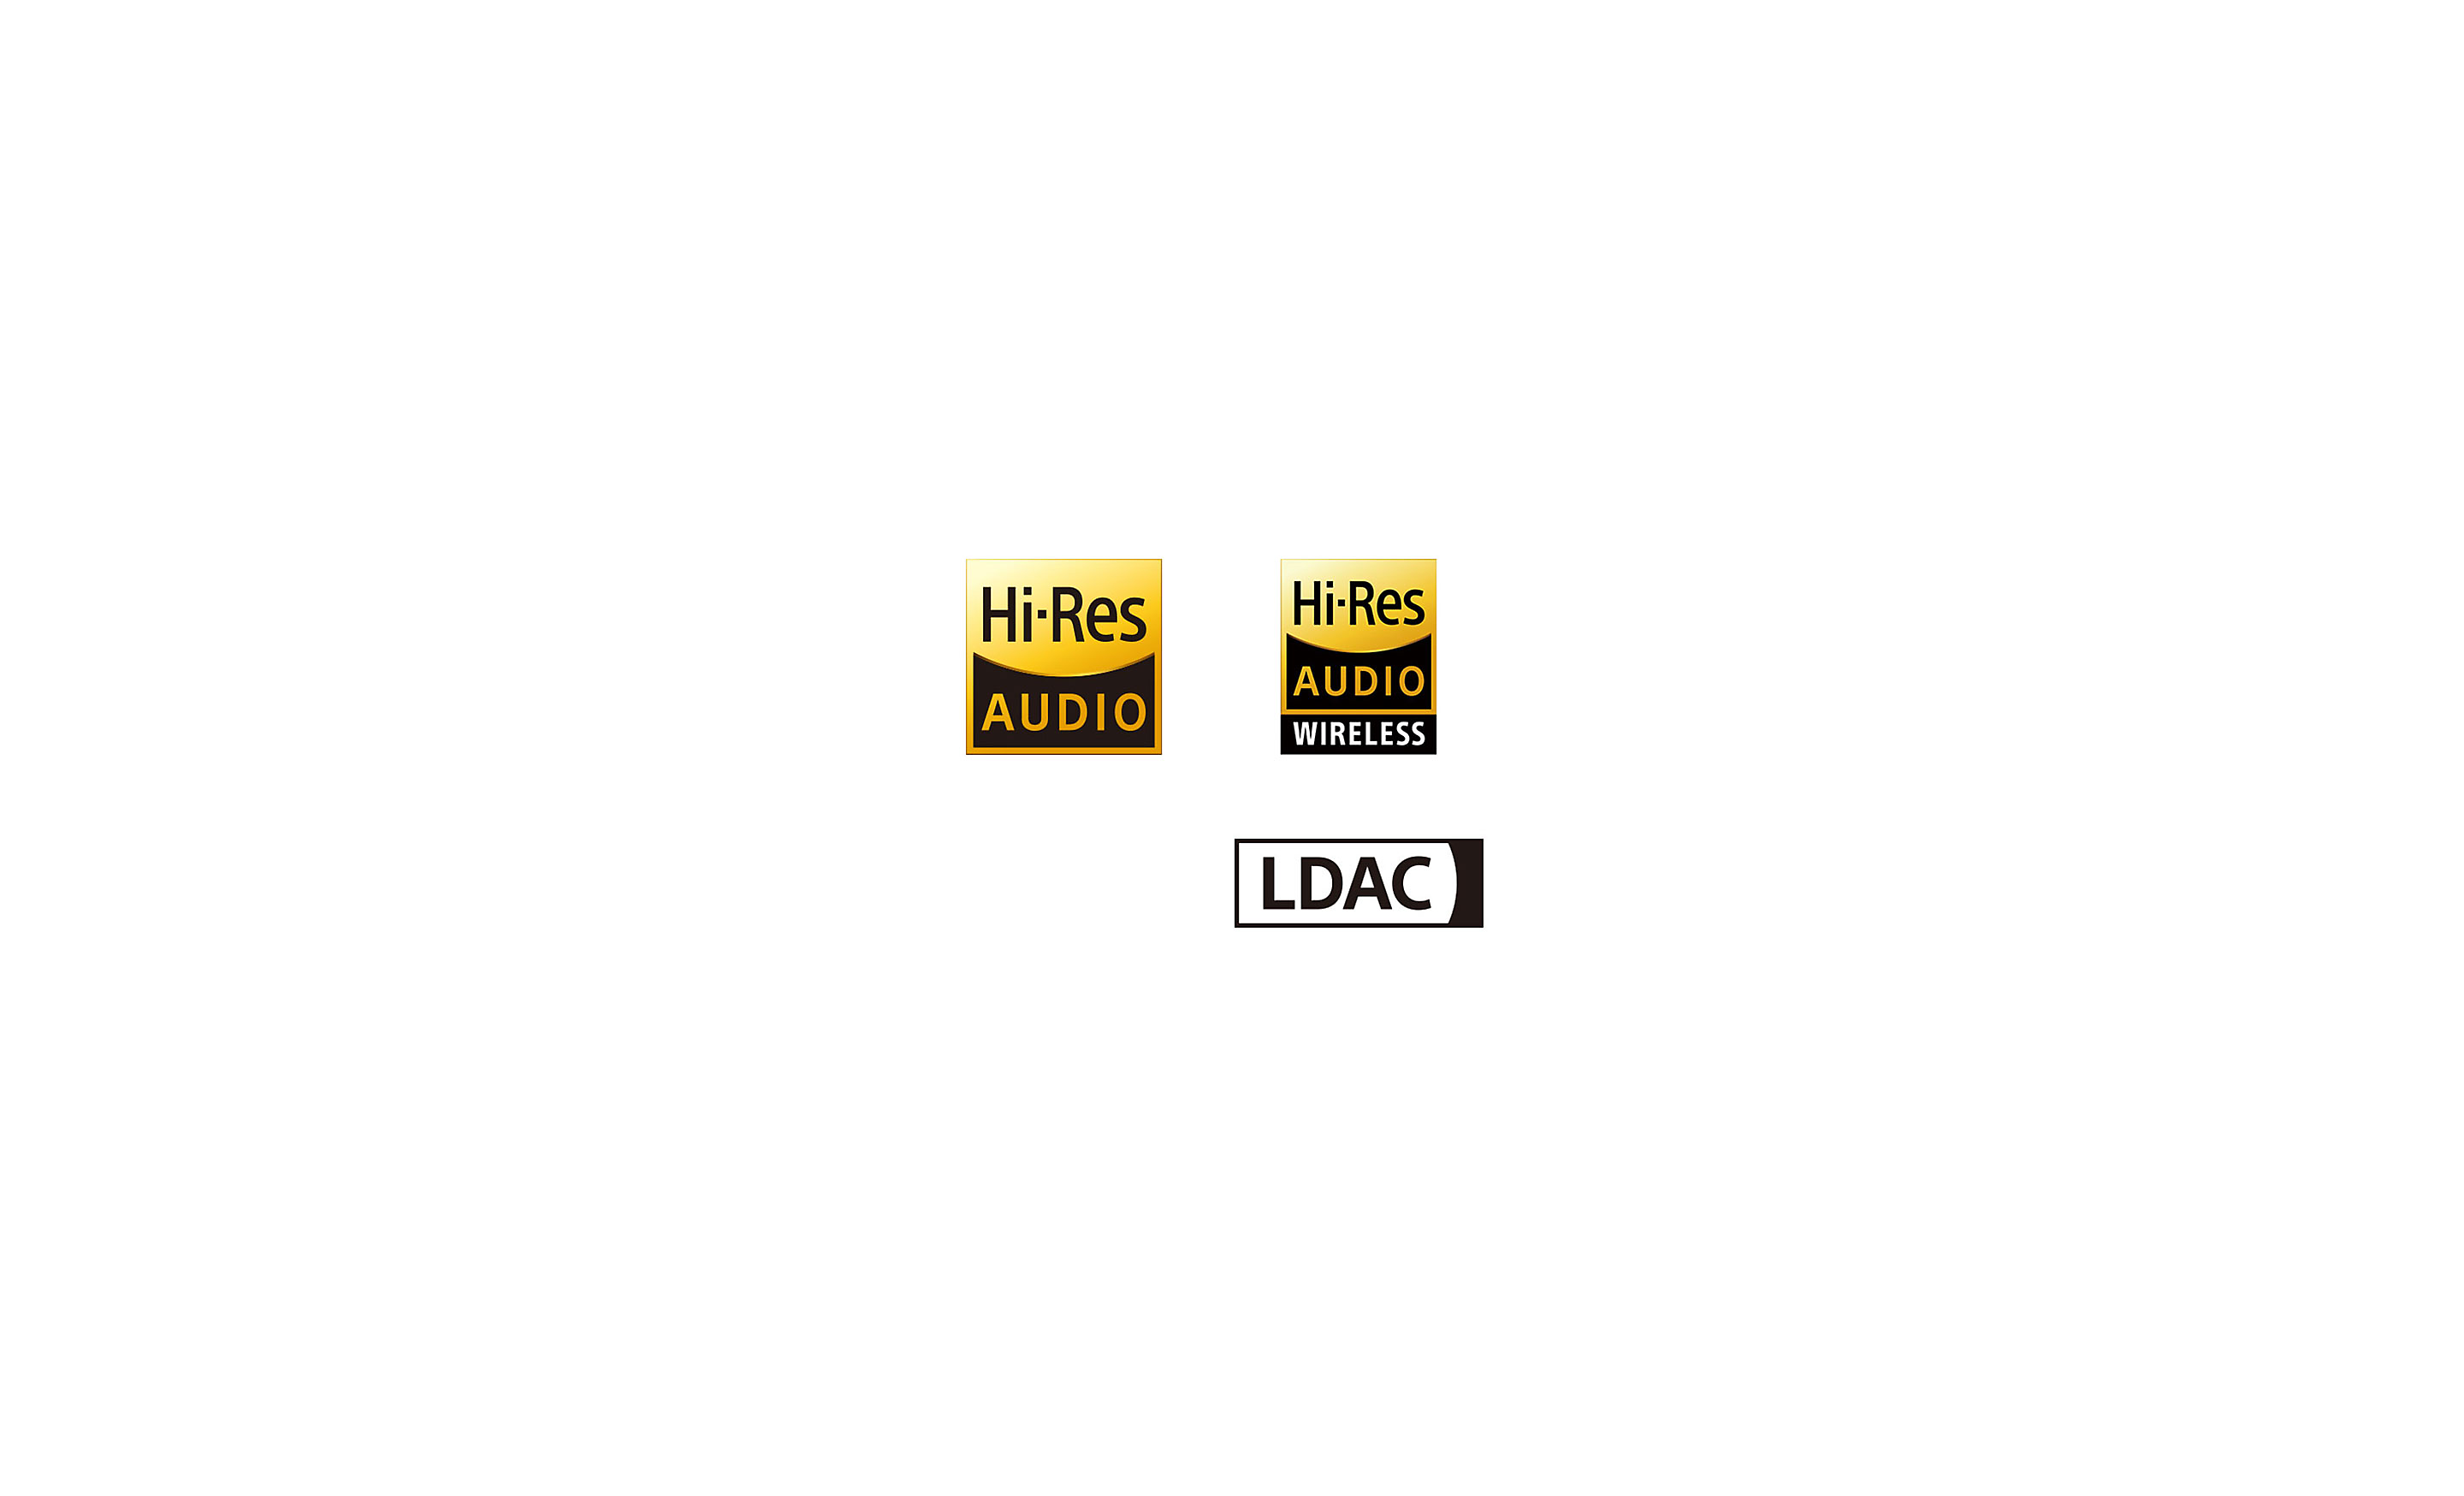 Hi-Res Audio, High-Res Audio Wireless and LDAC logos.